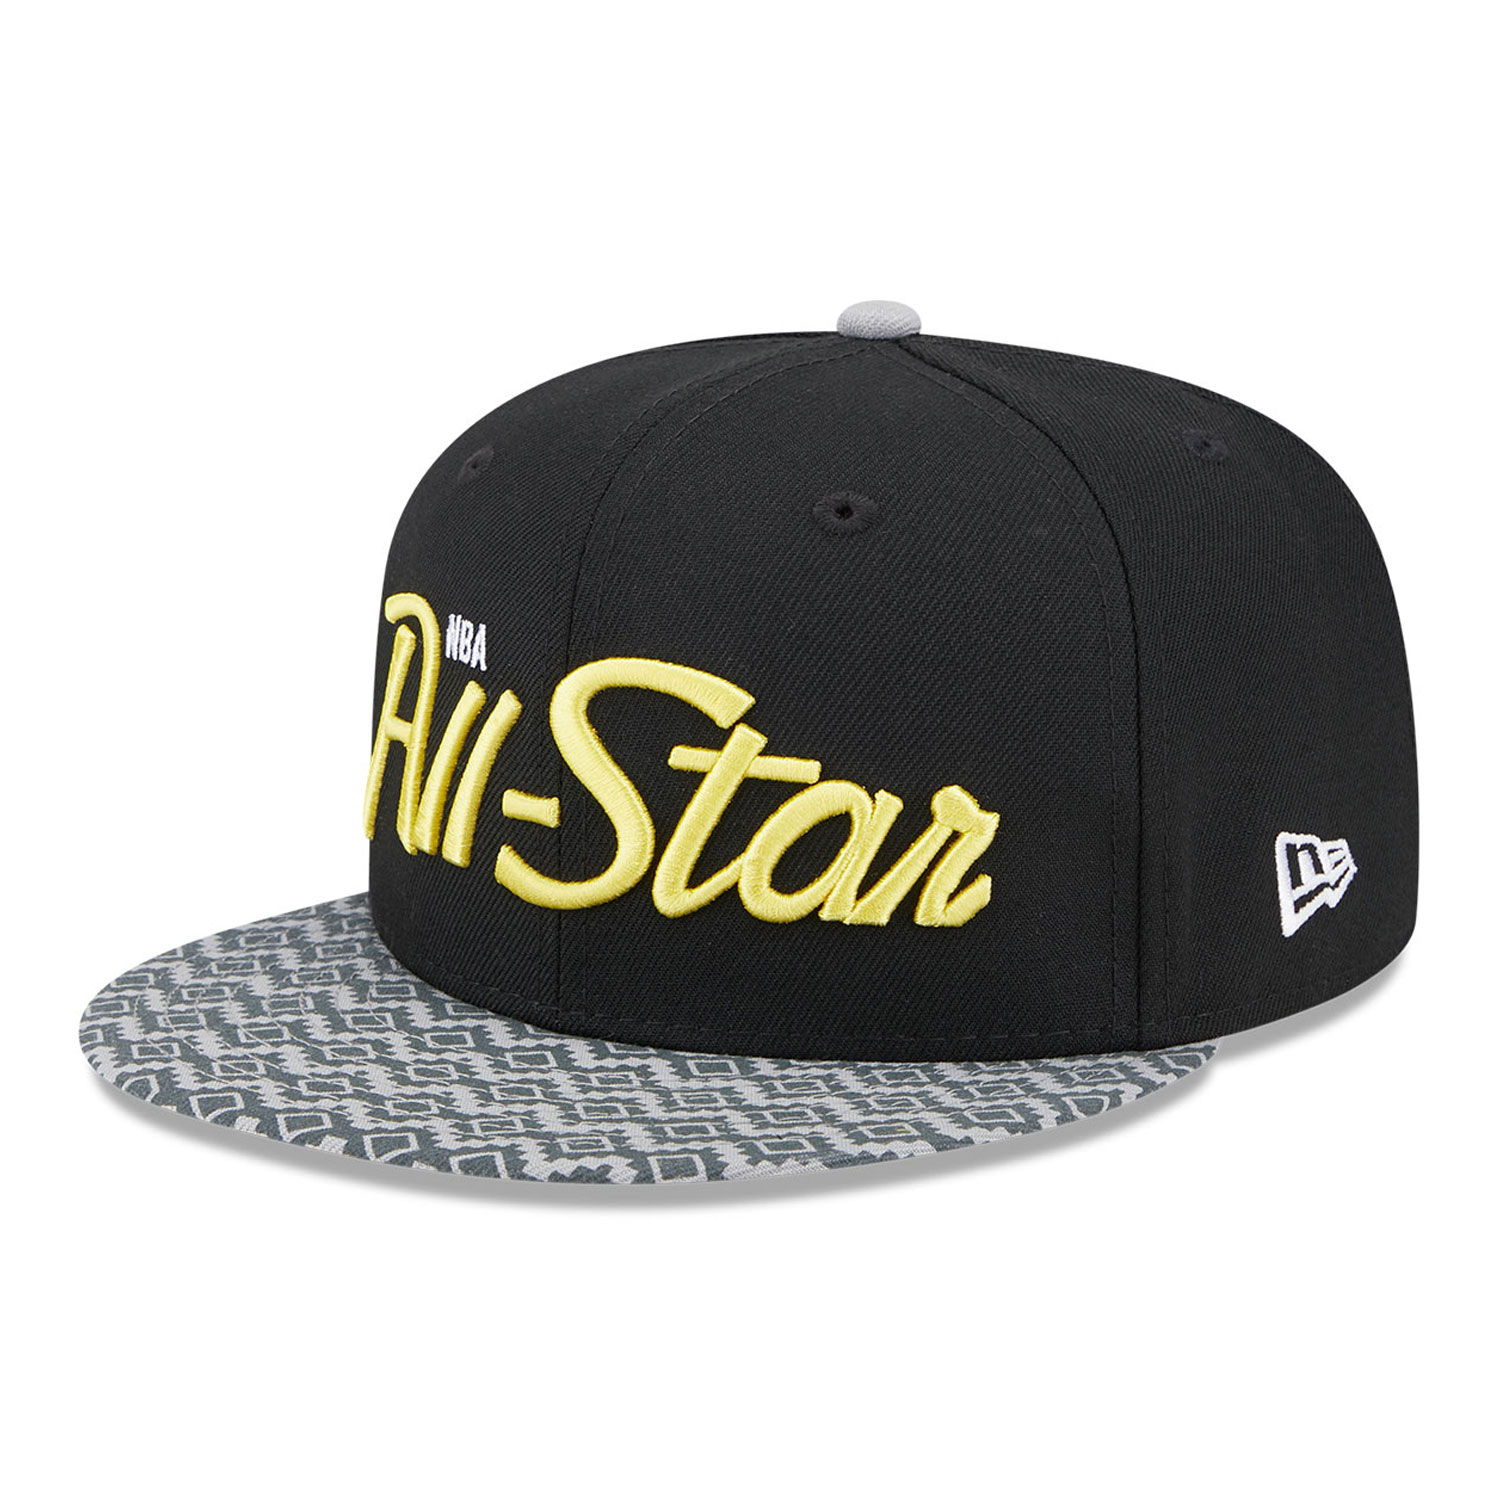 NBA All Star Game Black 9FIFTY Snapback Cap